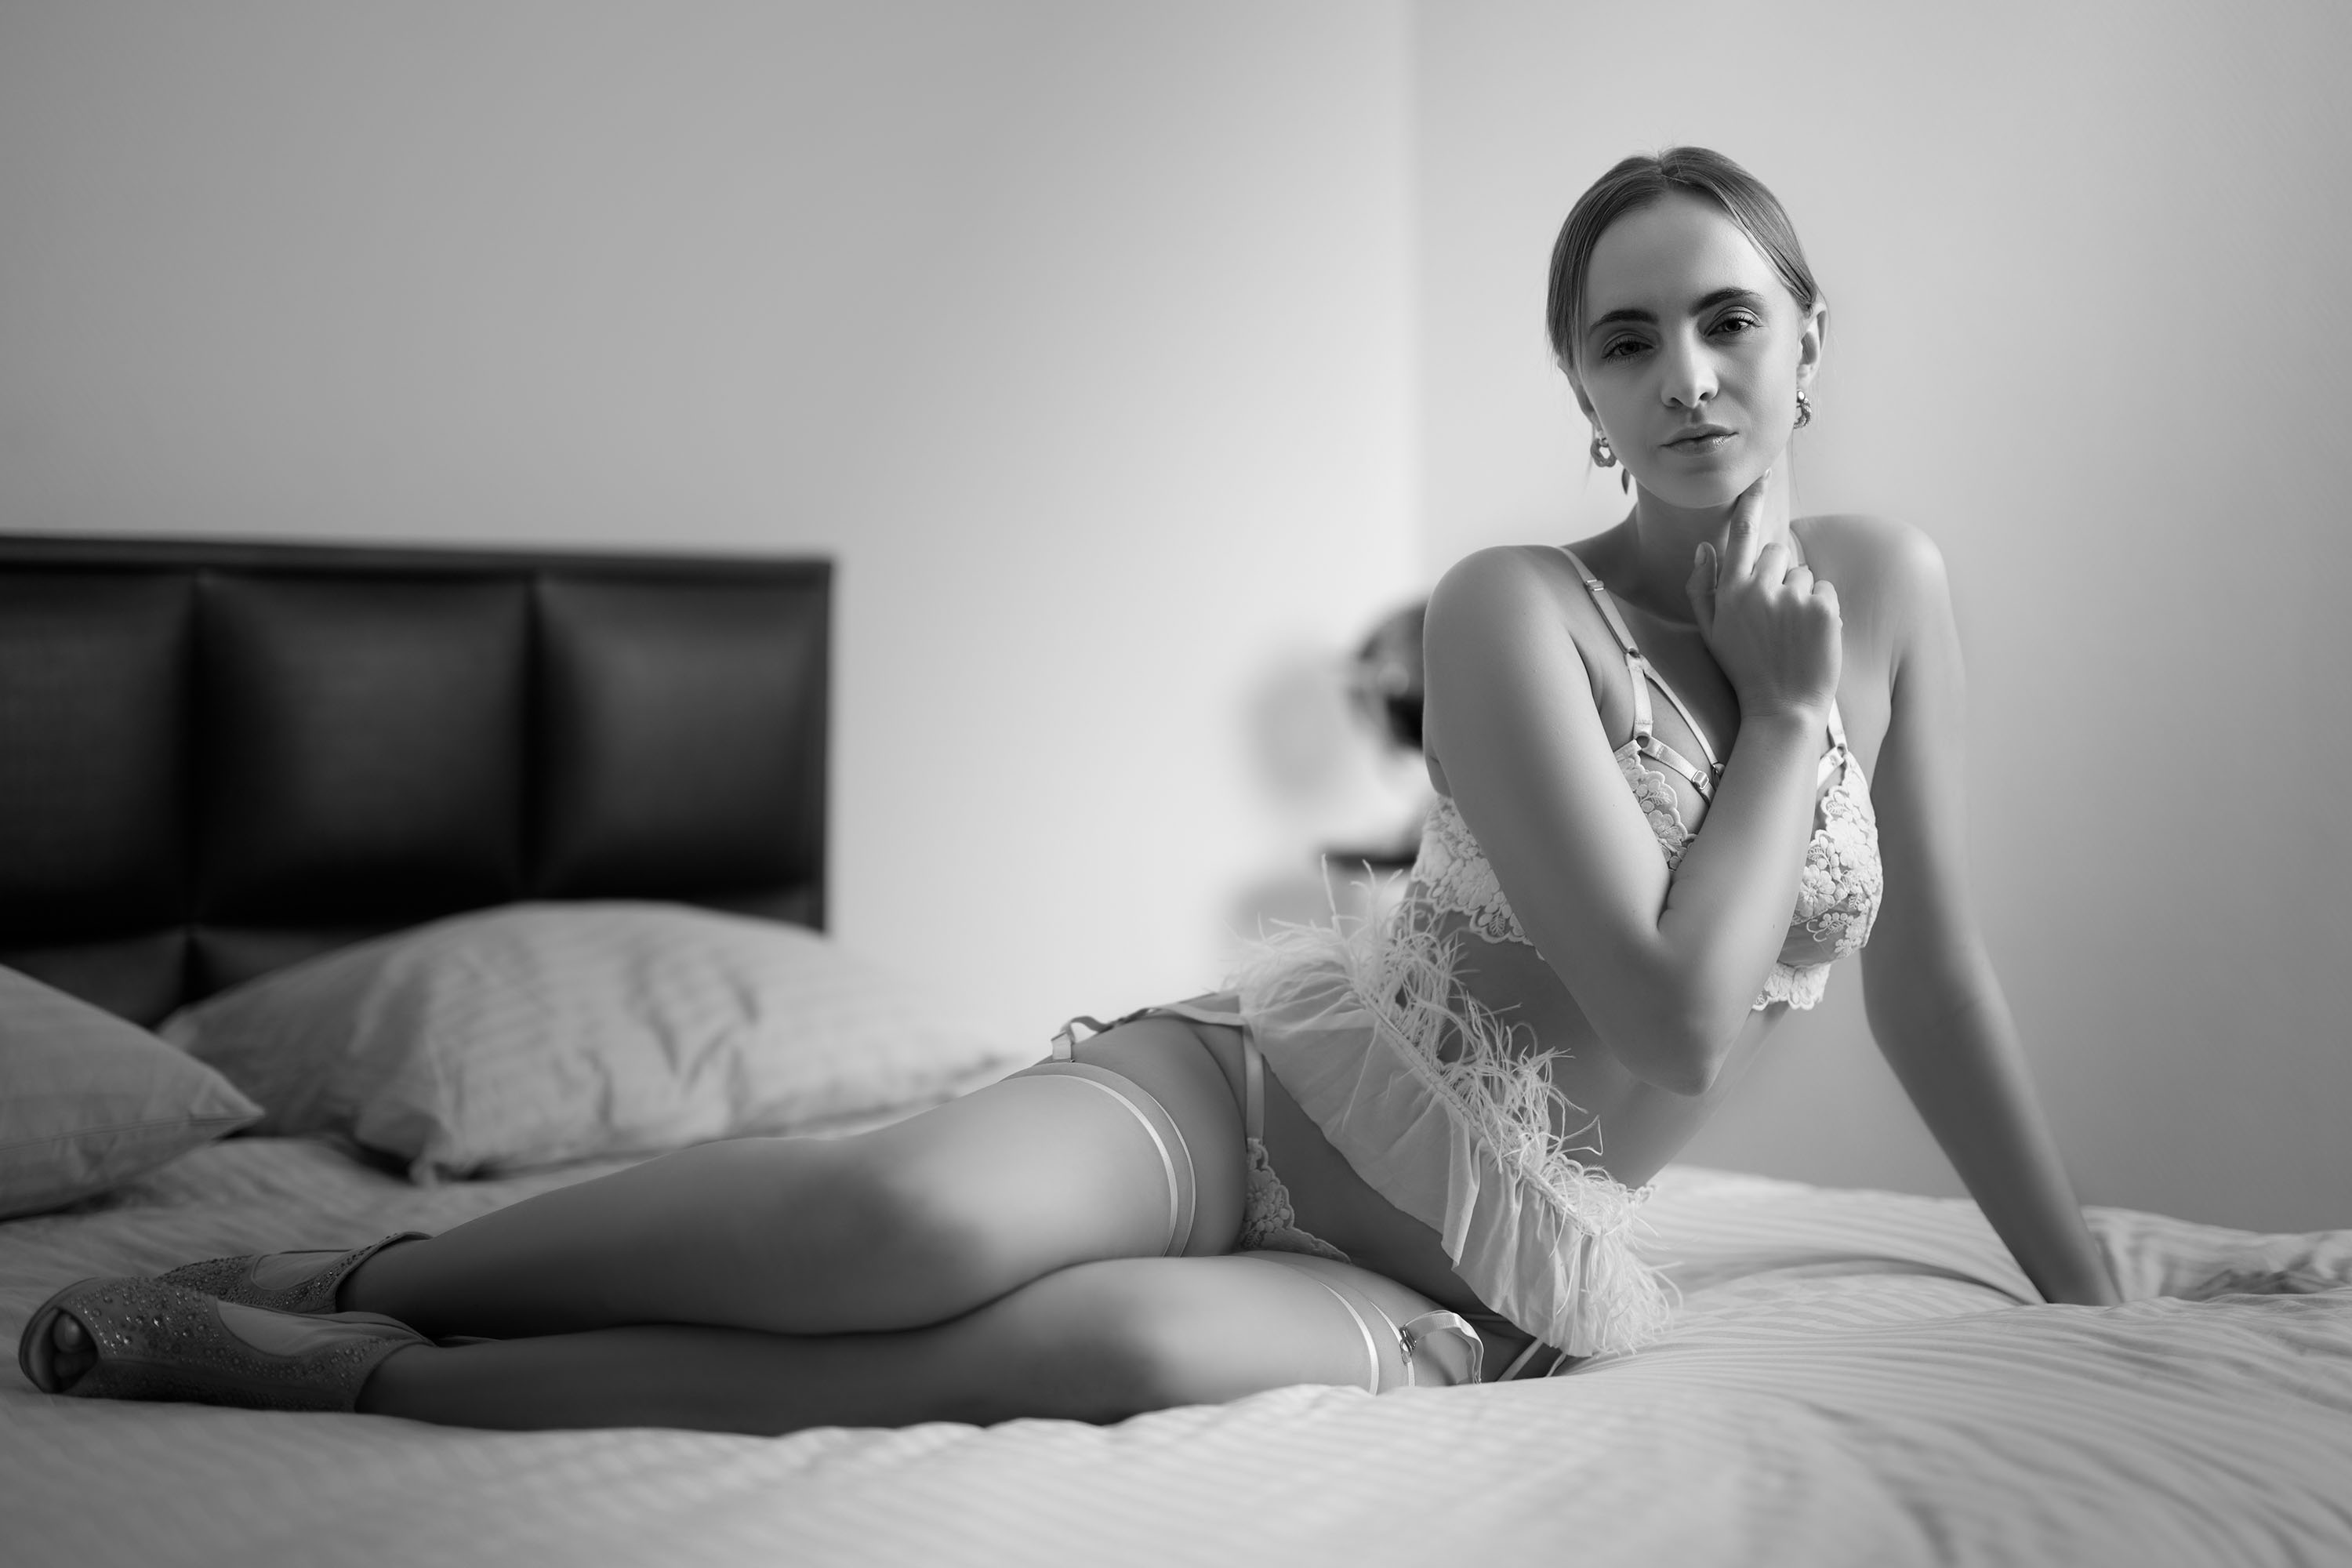 Diana Sokolova, model from Ukraine at a boudoir photoshoot